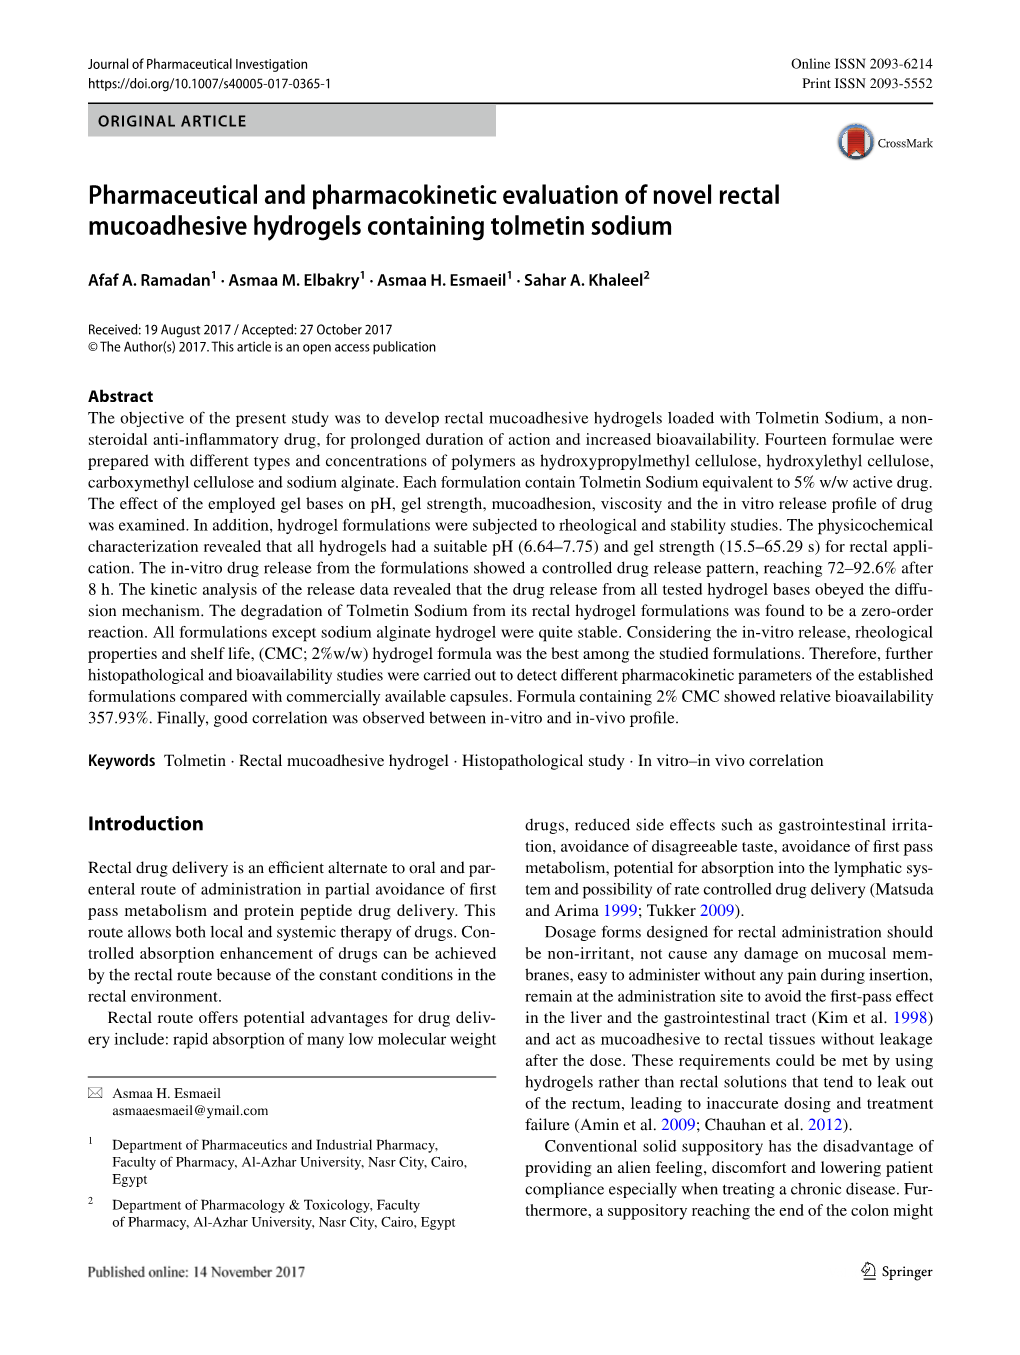 Pharmaceutical and Pharmacokinetic Evaluation of Novel Rectal Mucoadhesive Hydrogels Containing Tolmetin Sodium